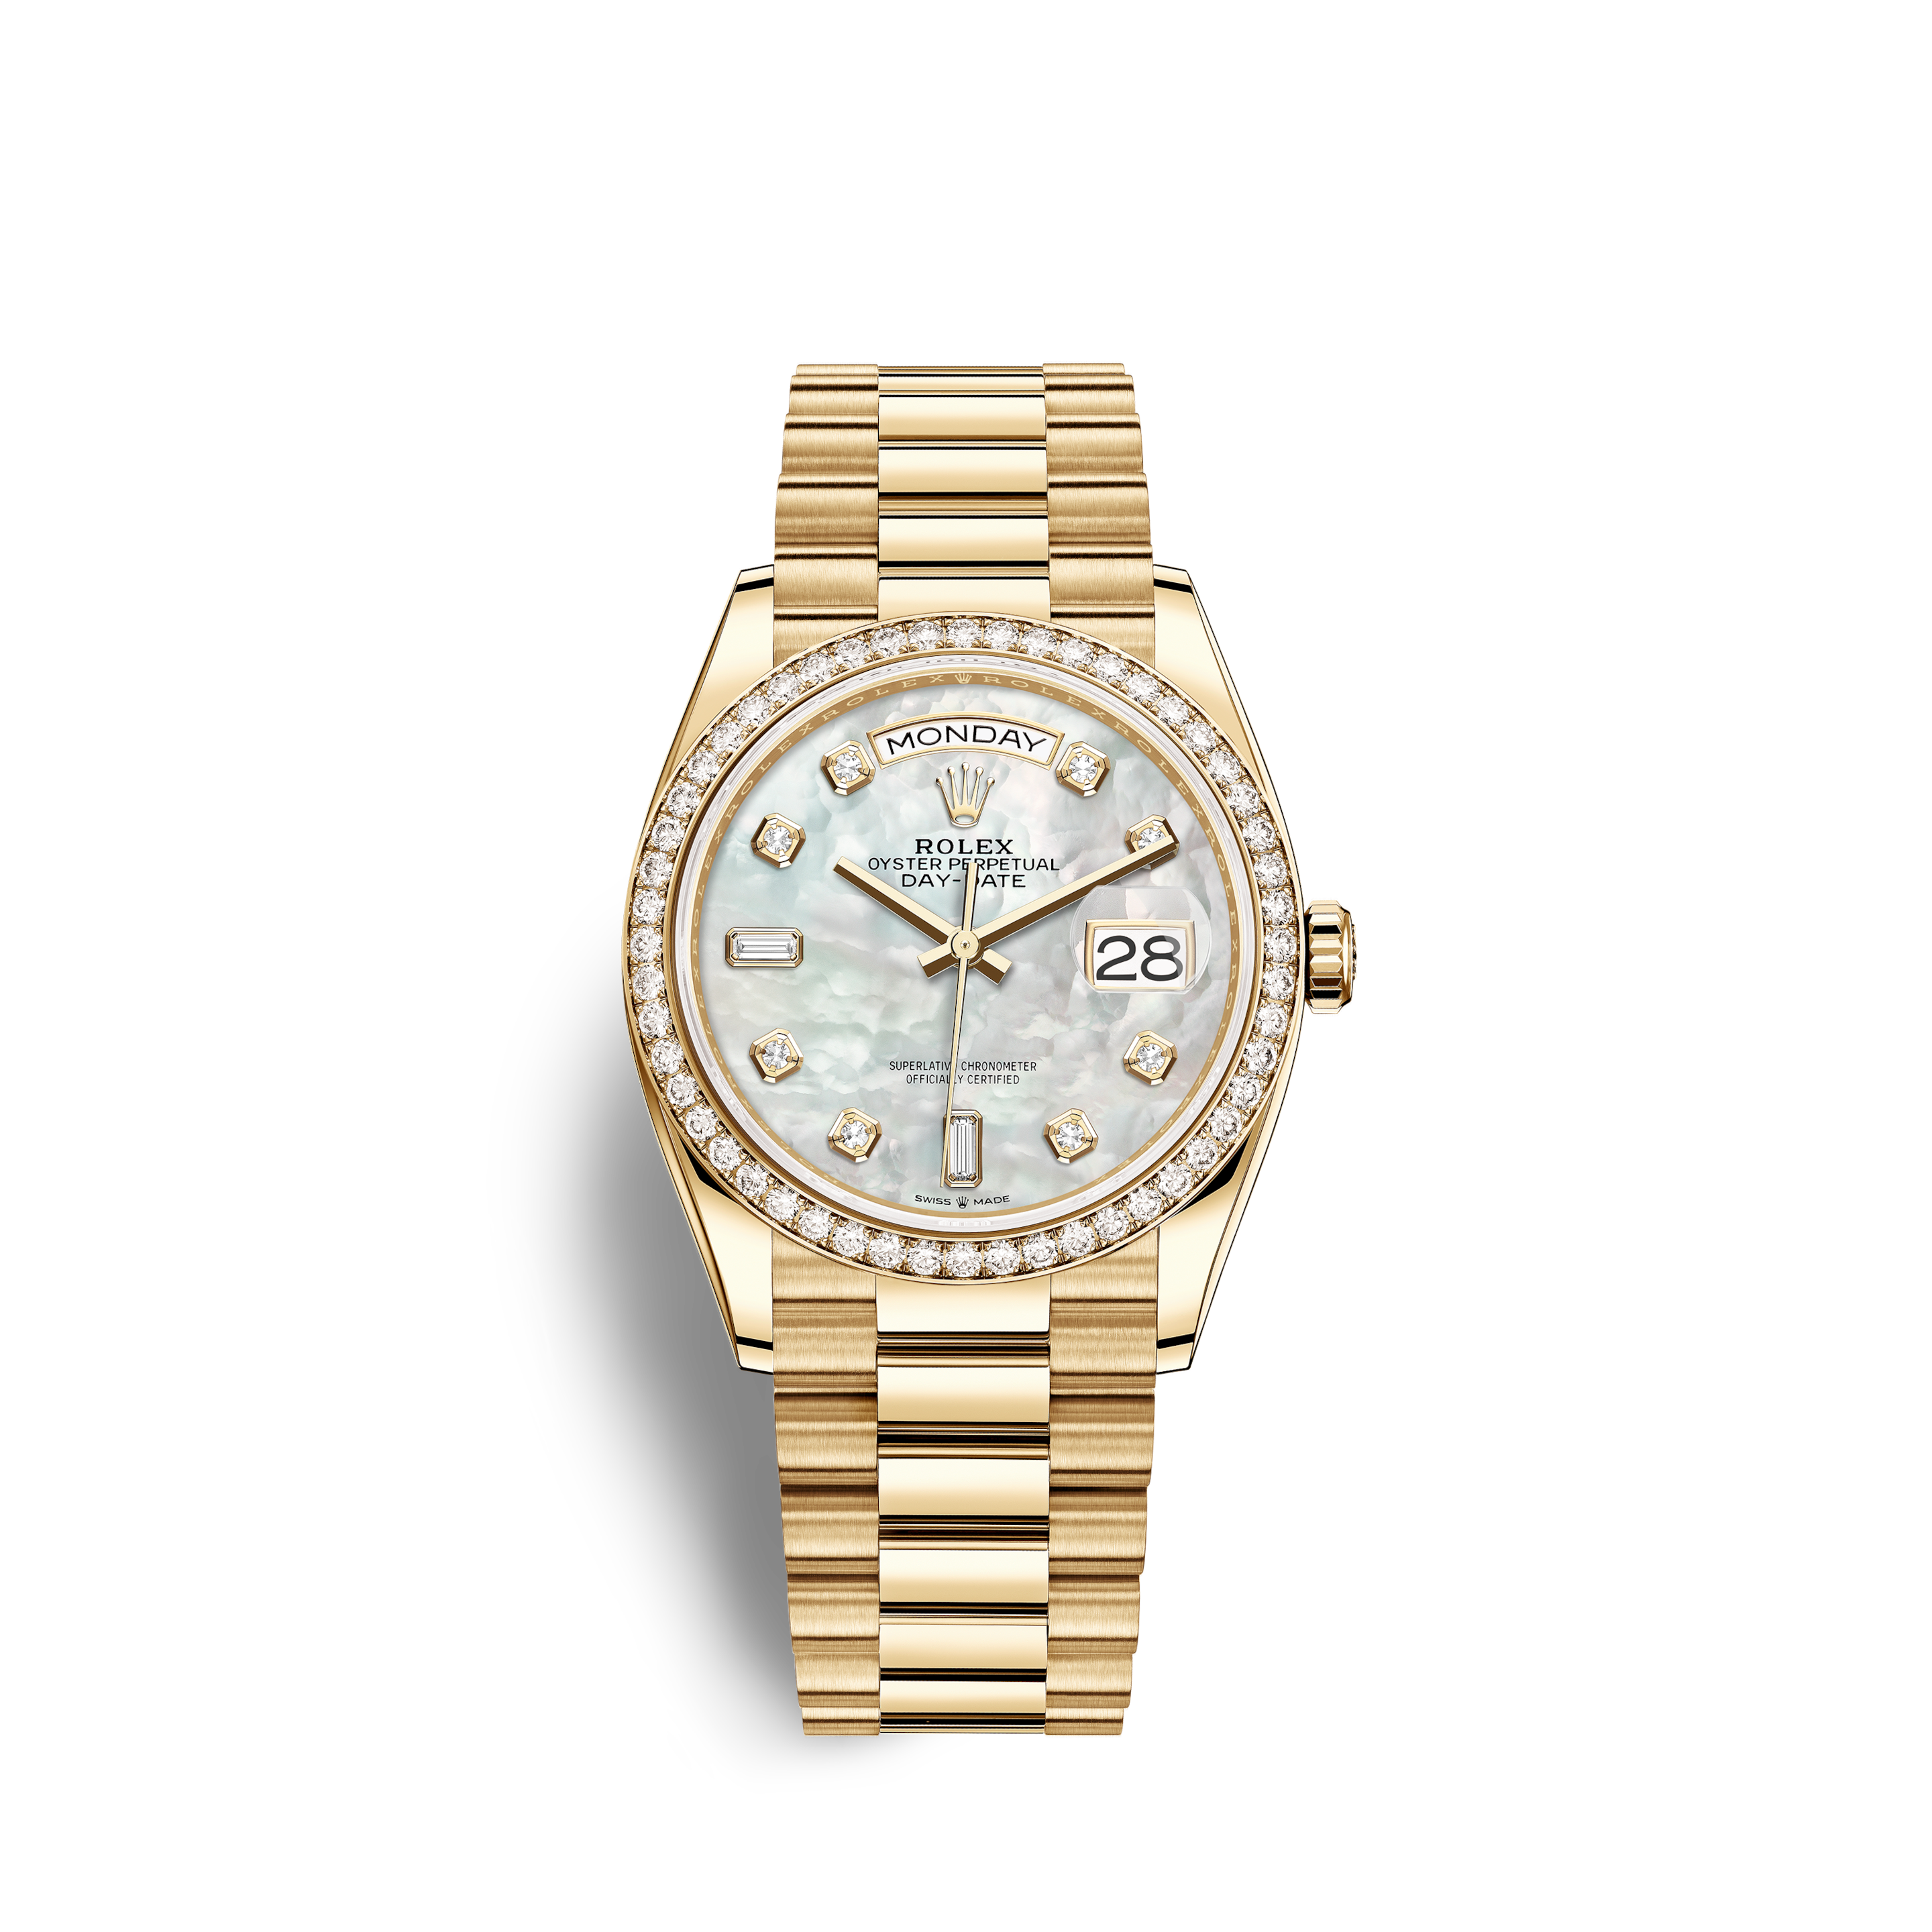 Gem and Diamond Bezel Watches - Find 